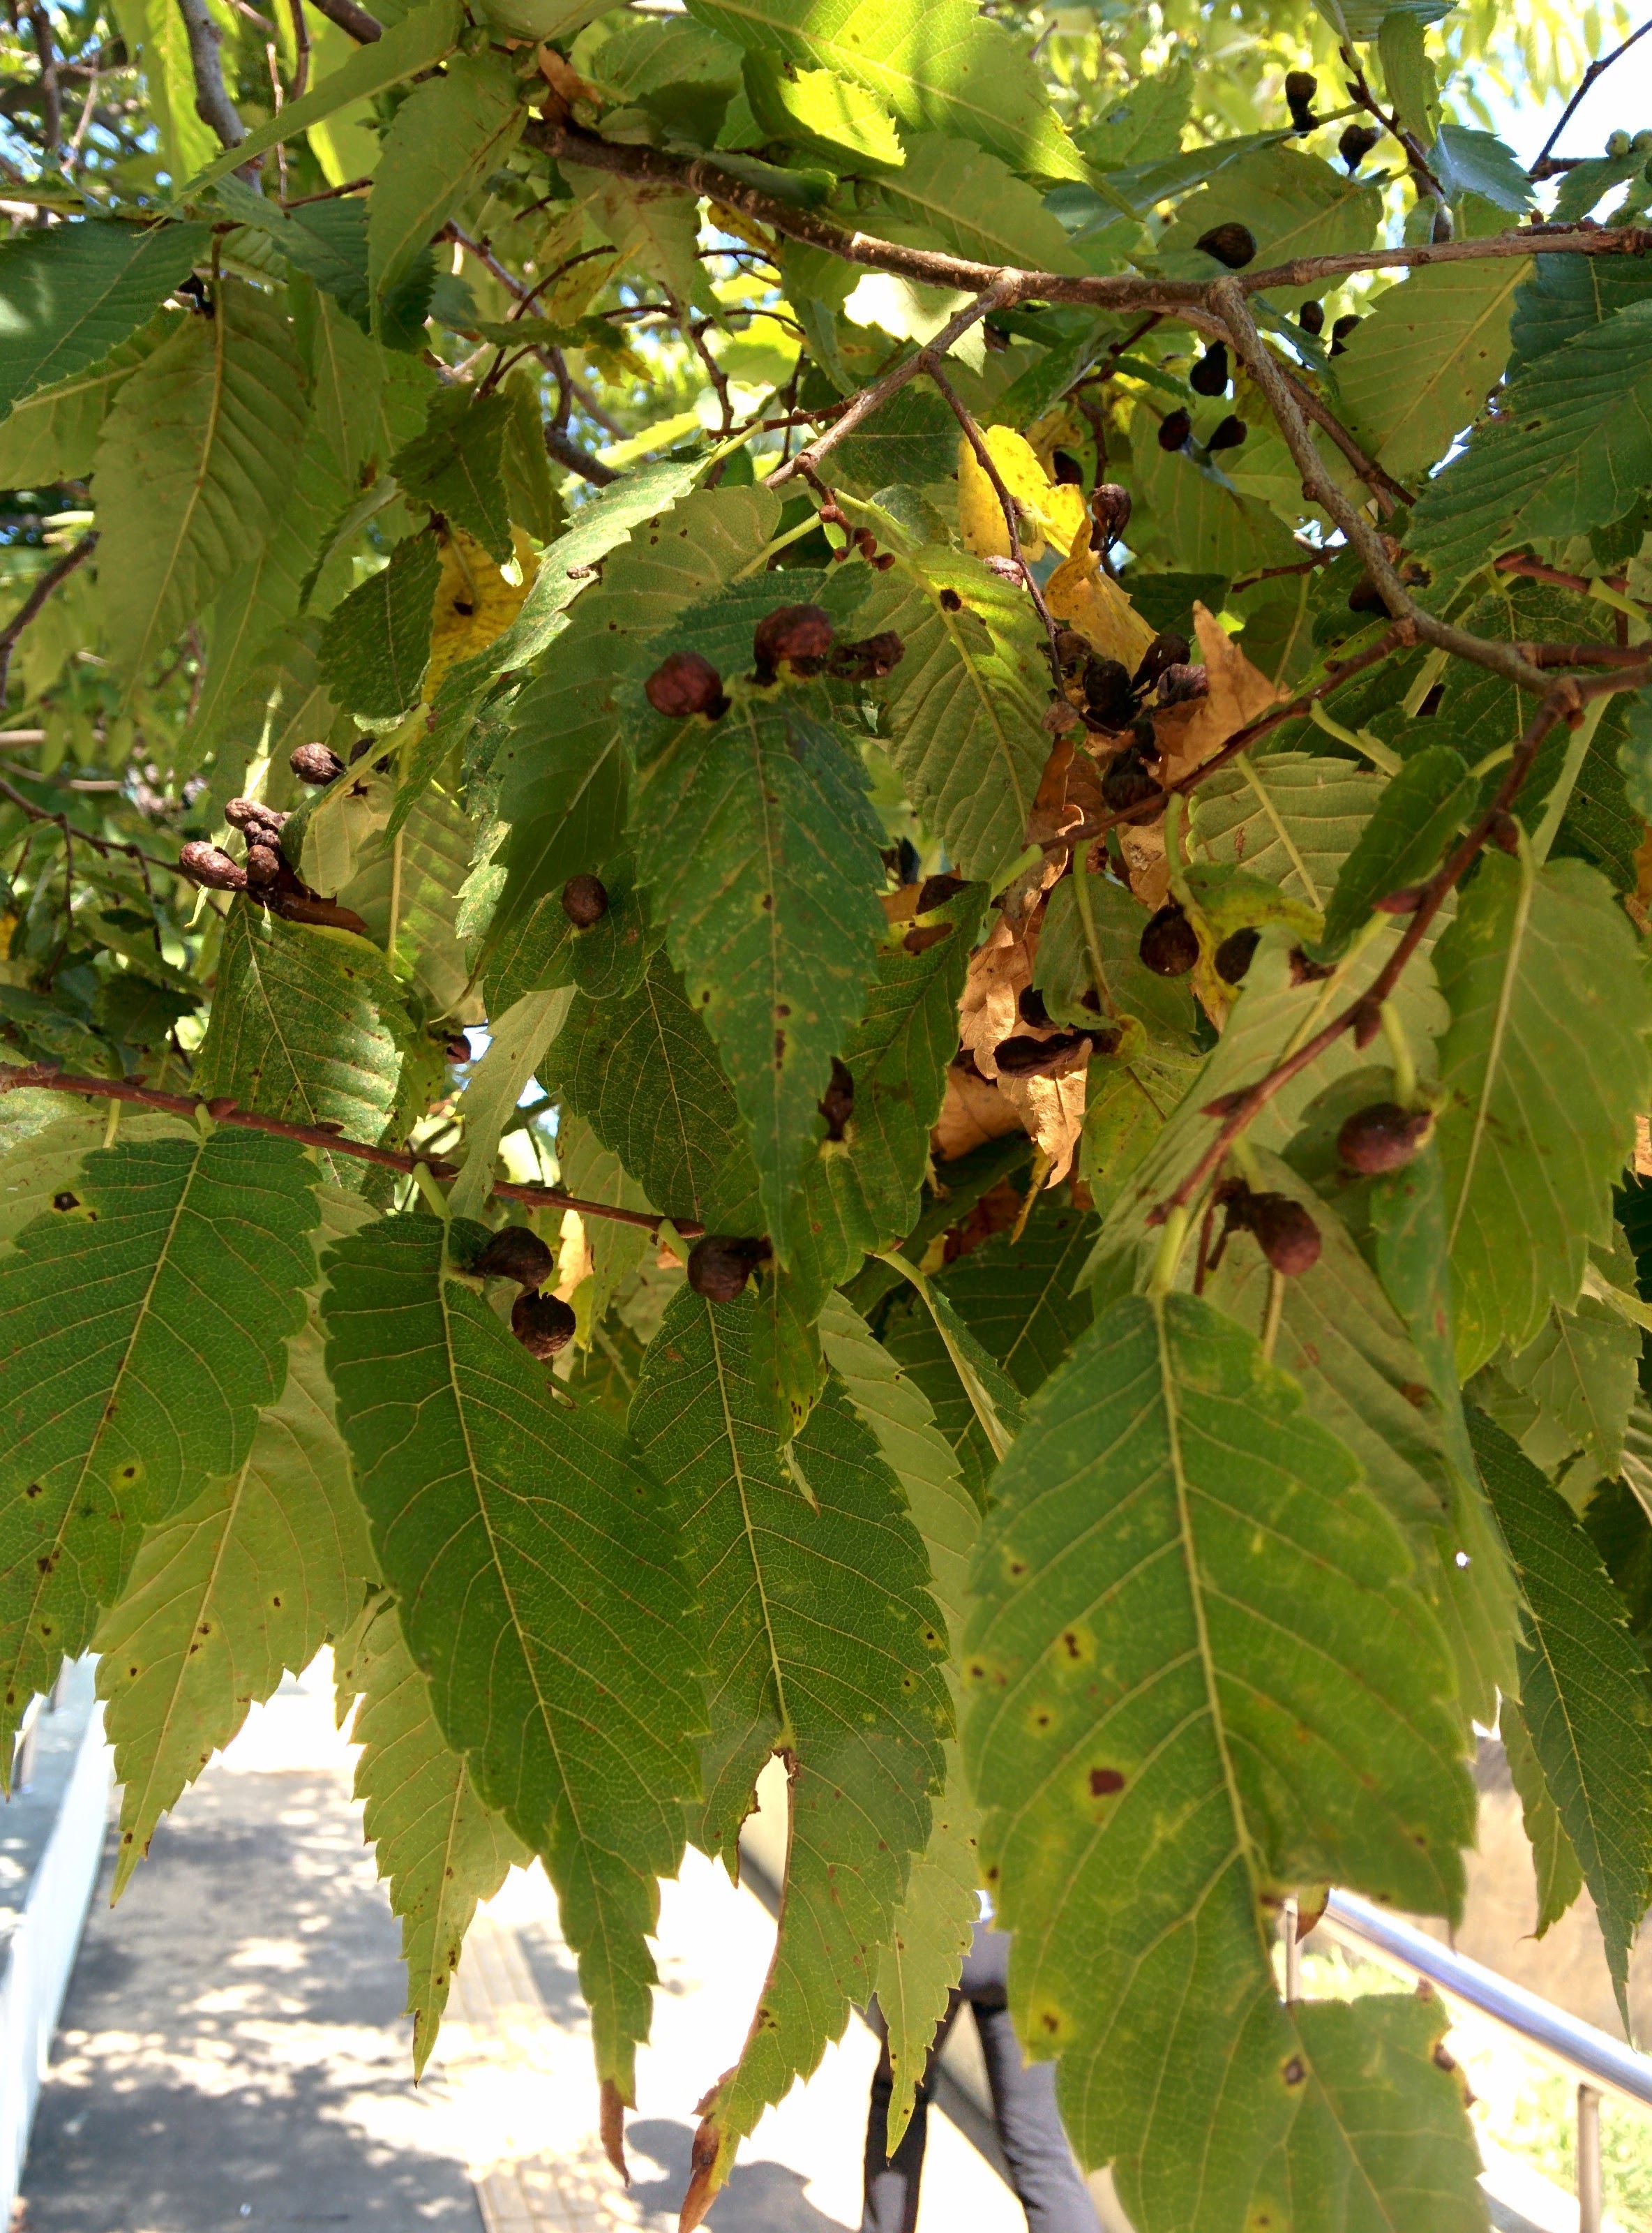 IMG_20150929_124306.jpg 느티나무 잎사귀에 열린 혹 - 느티나무외줄면충의 충영(벌레집)